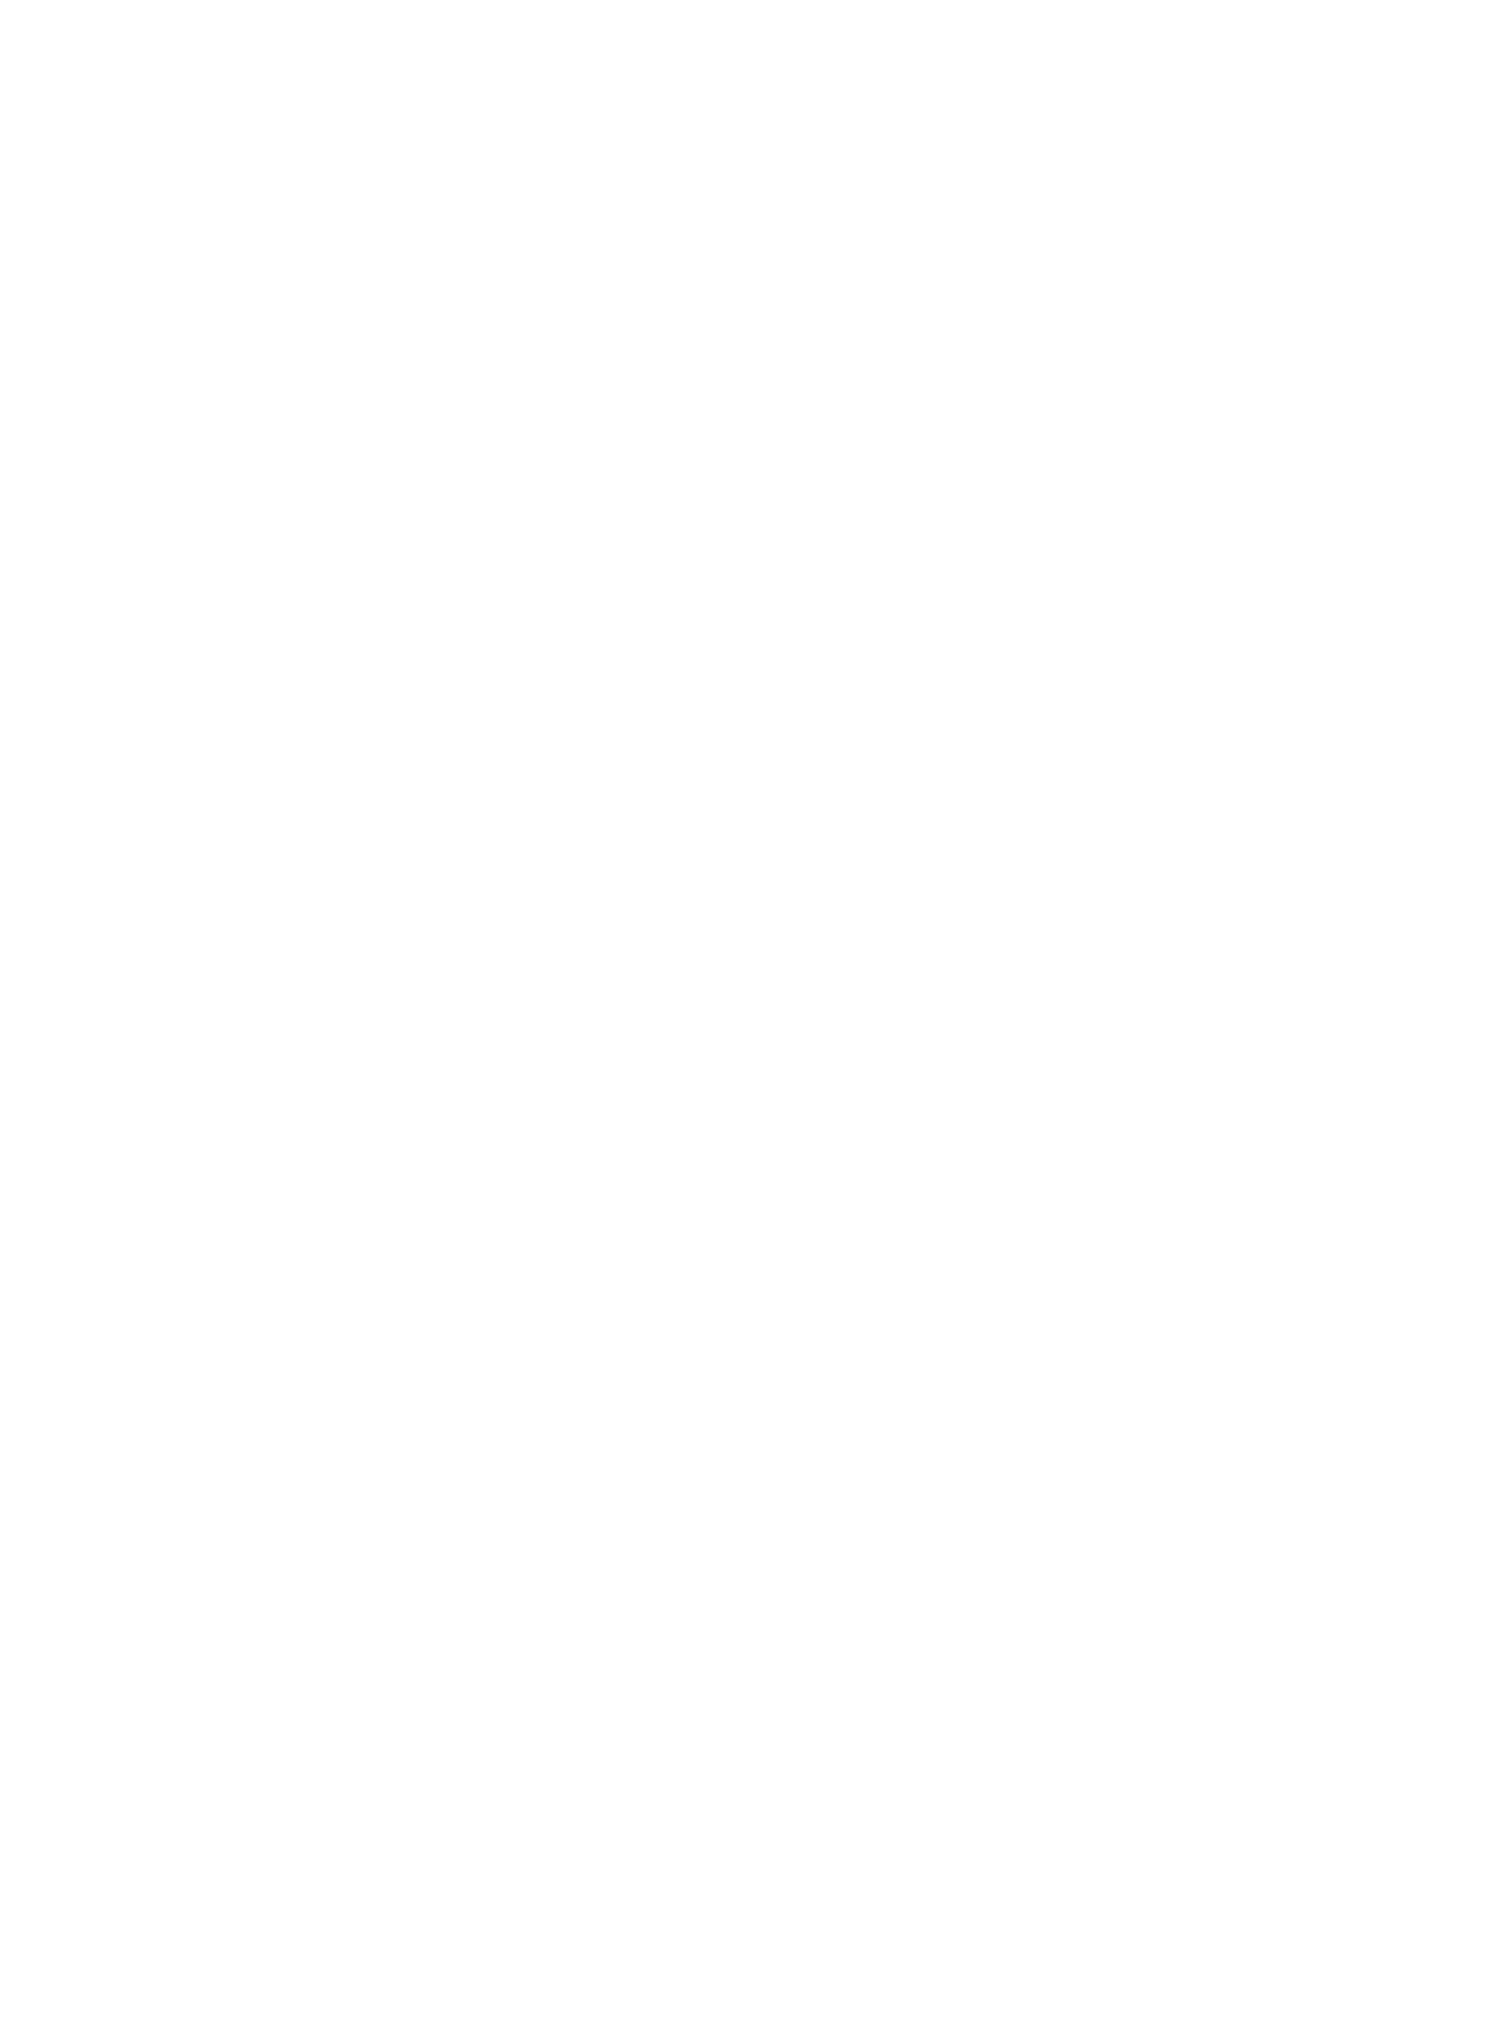 Colorado Cello Quartet